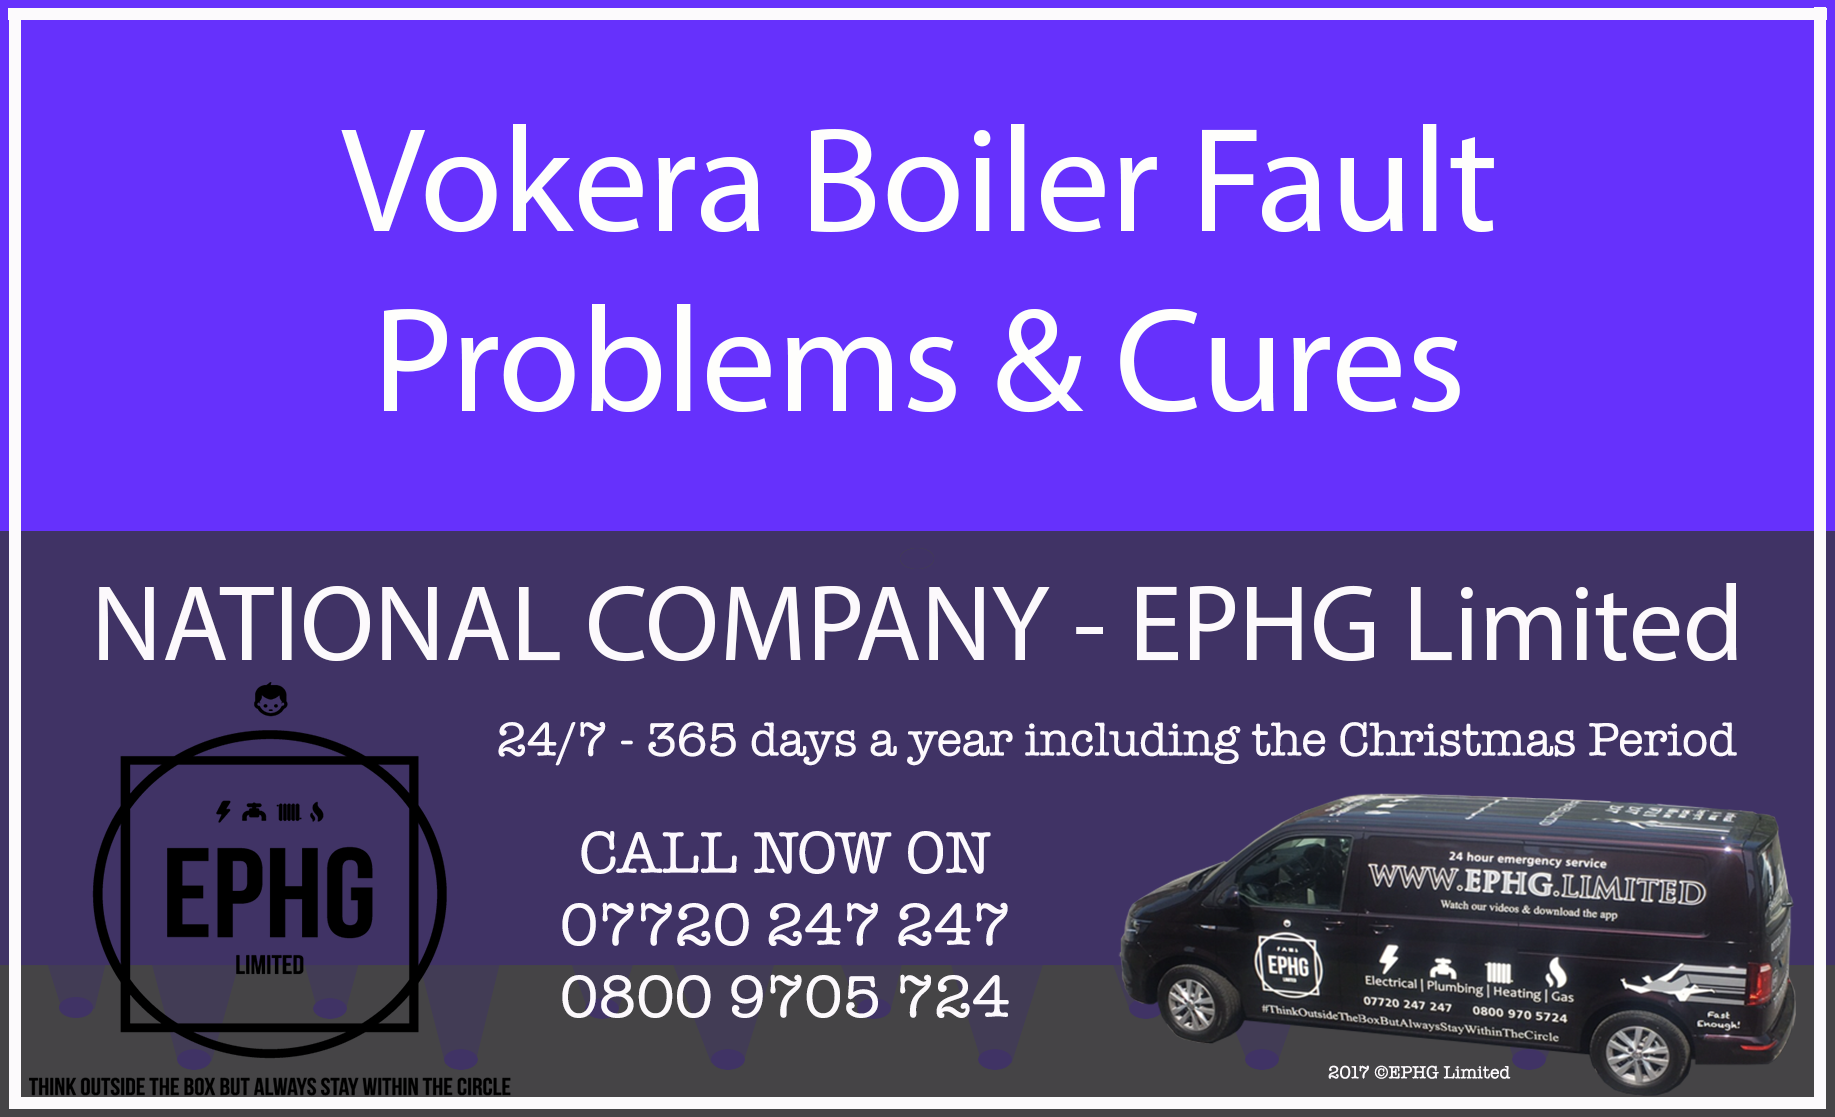 Vokera Boiler Fault Problem And Cures